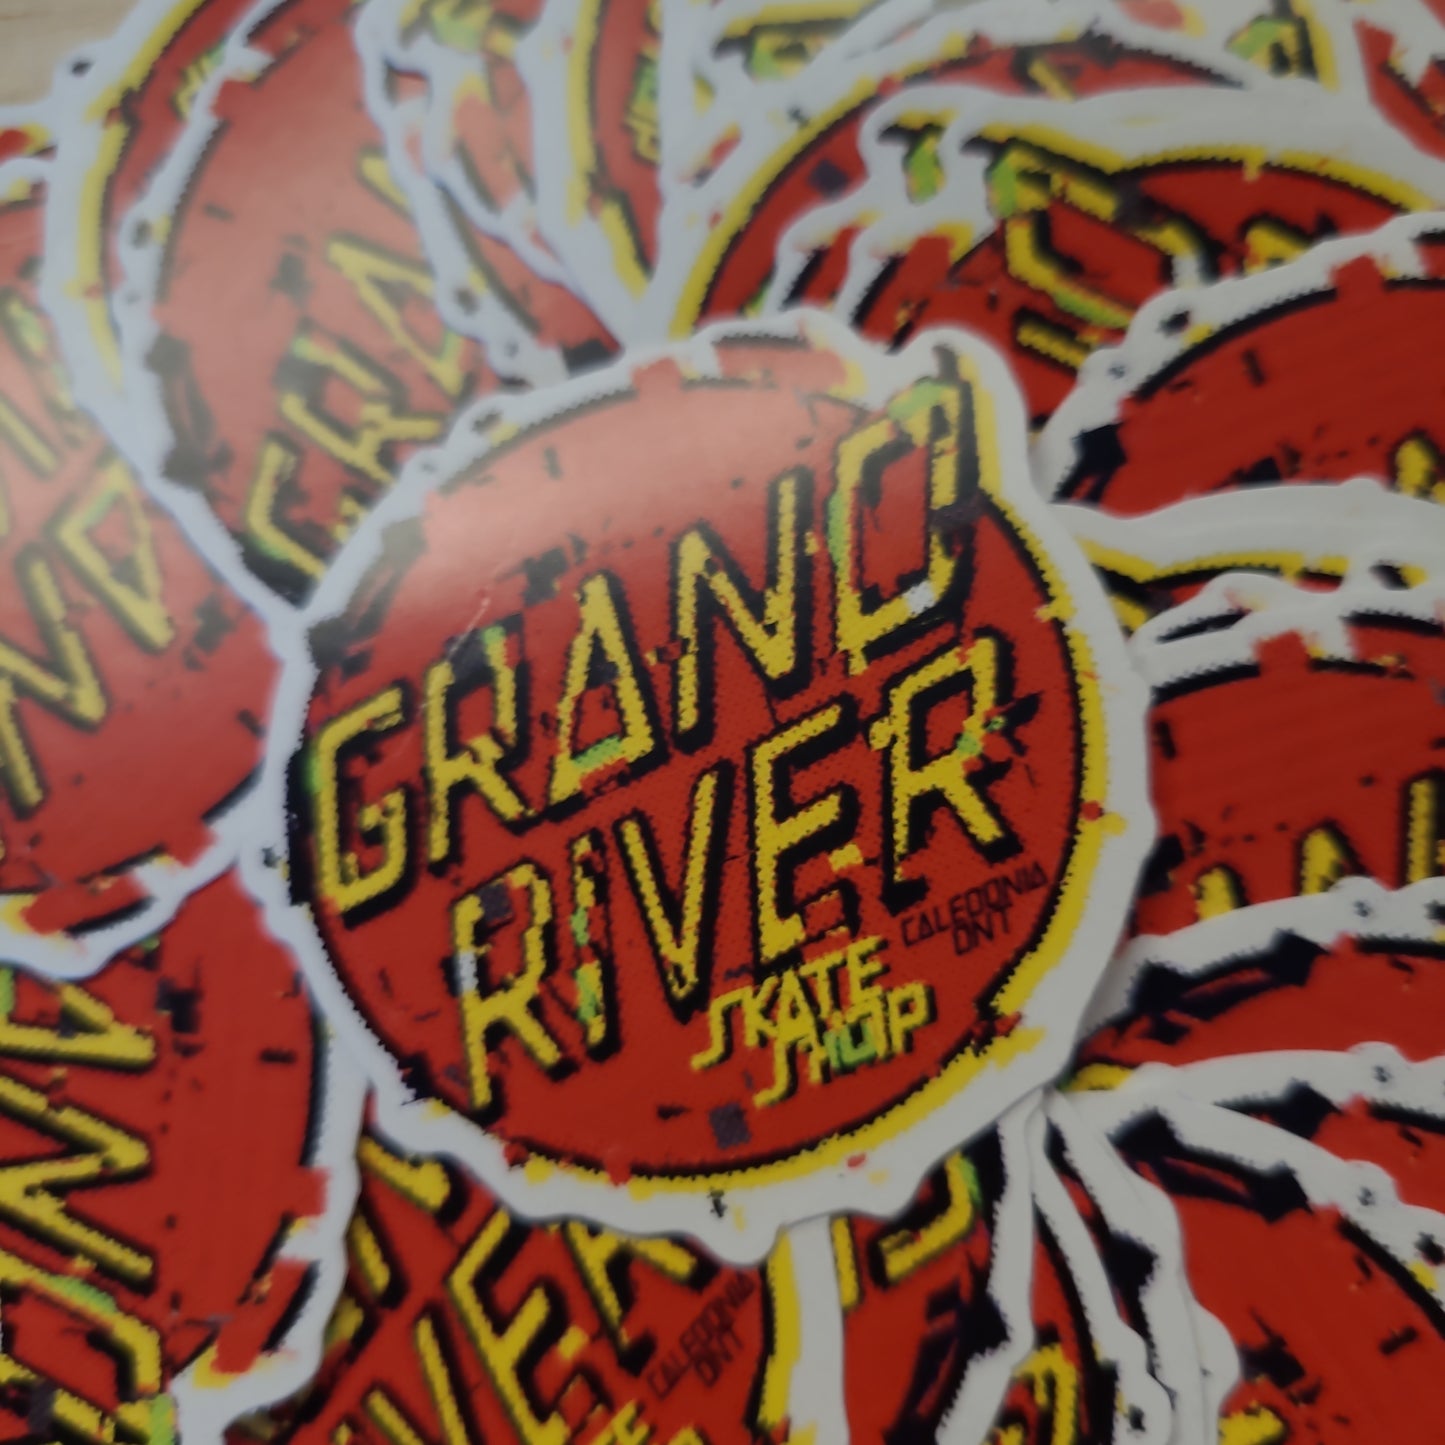 Grand River - Cease & Desist Sticker Pack #1